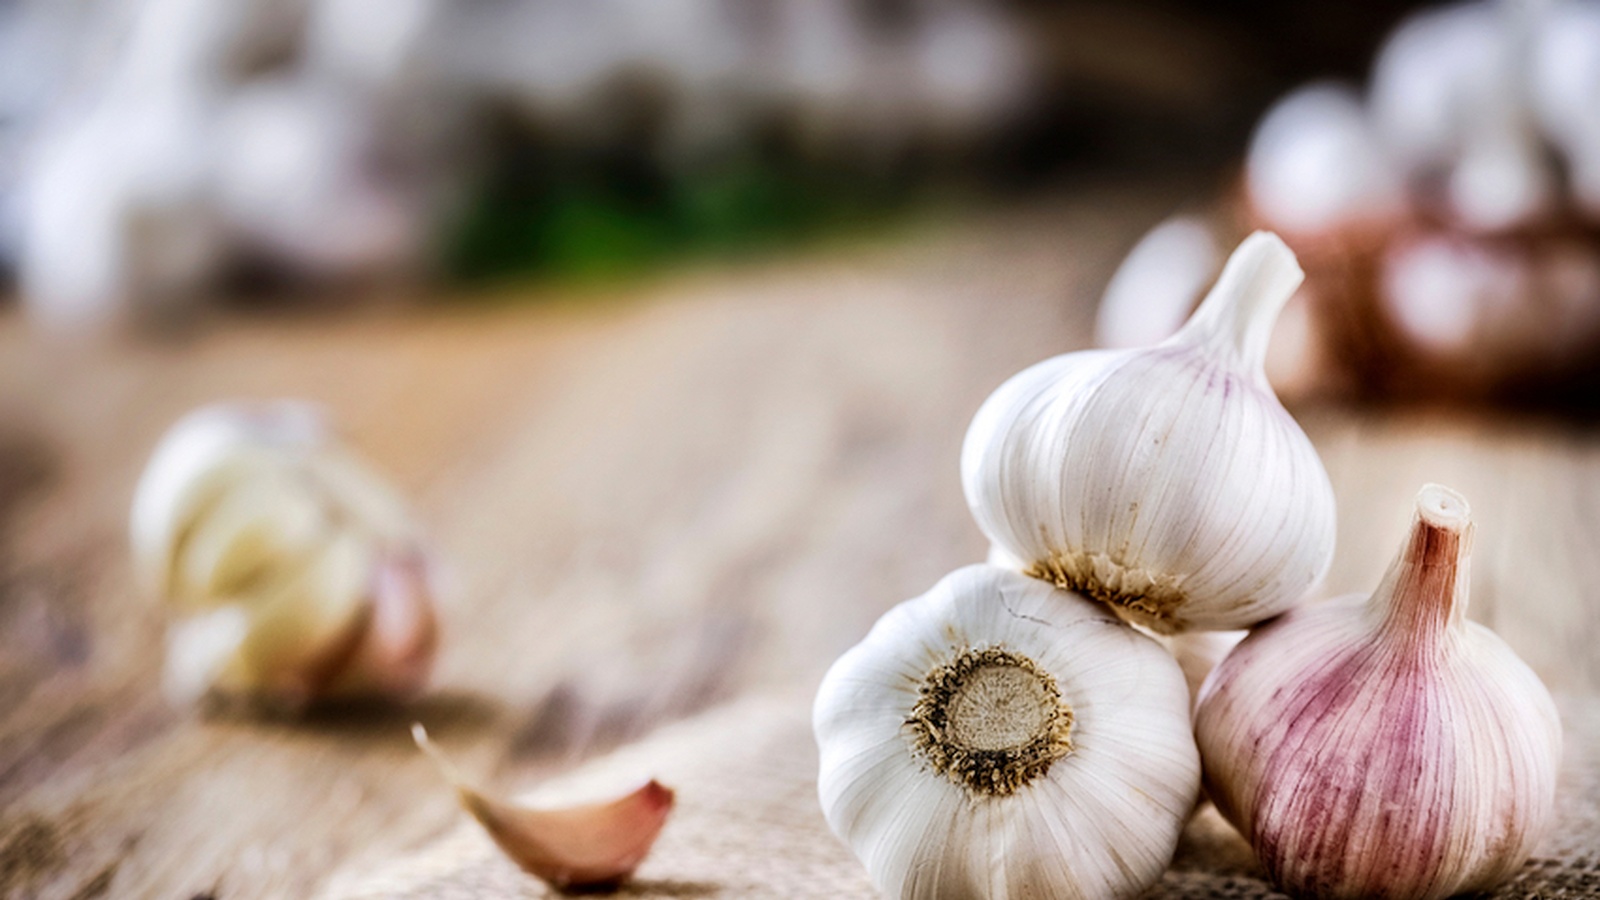 7 Health Benefits of Garlic